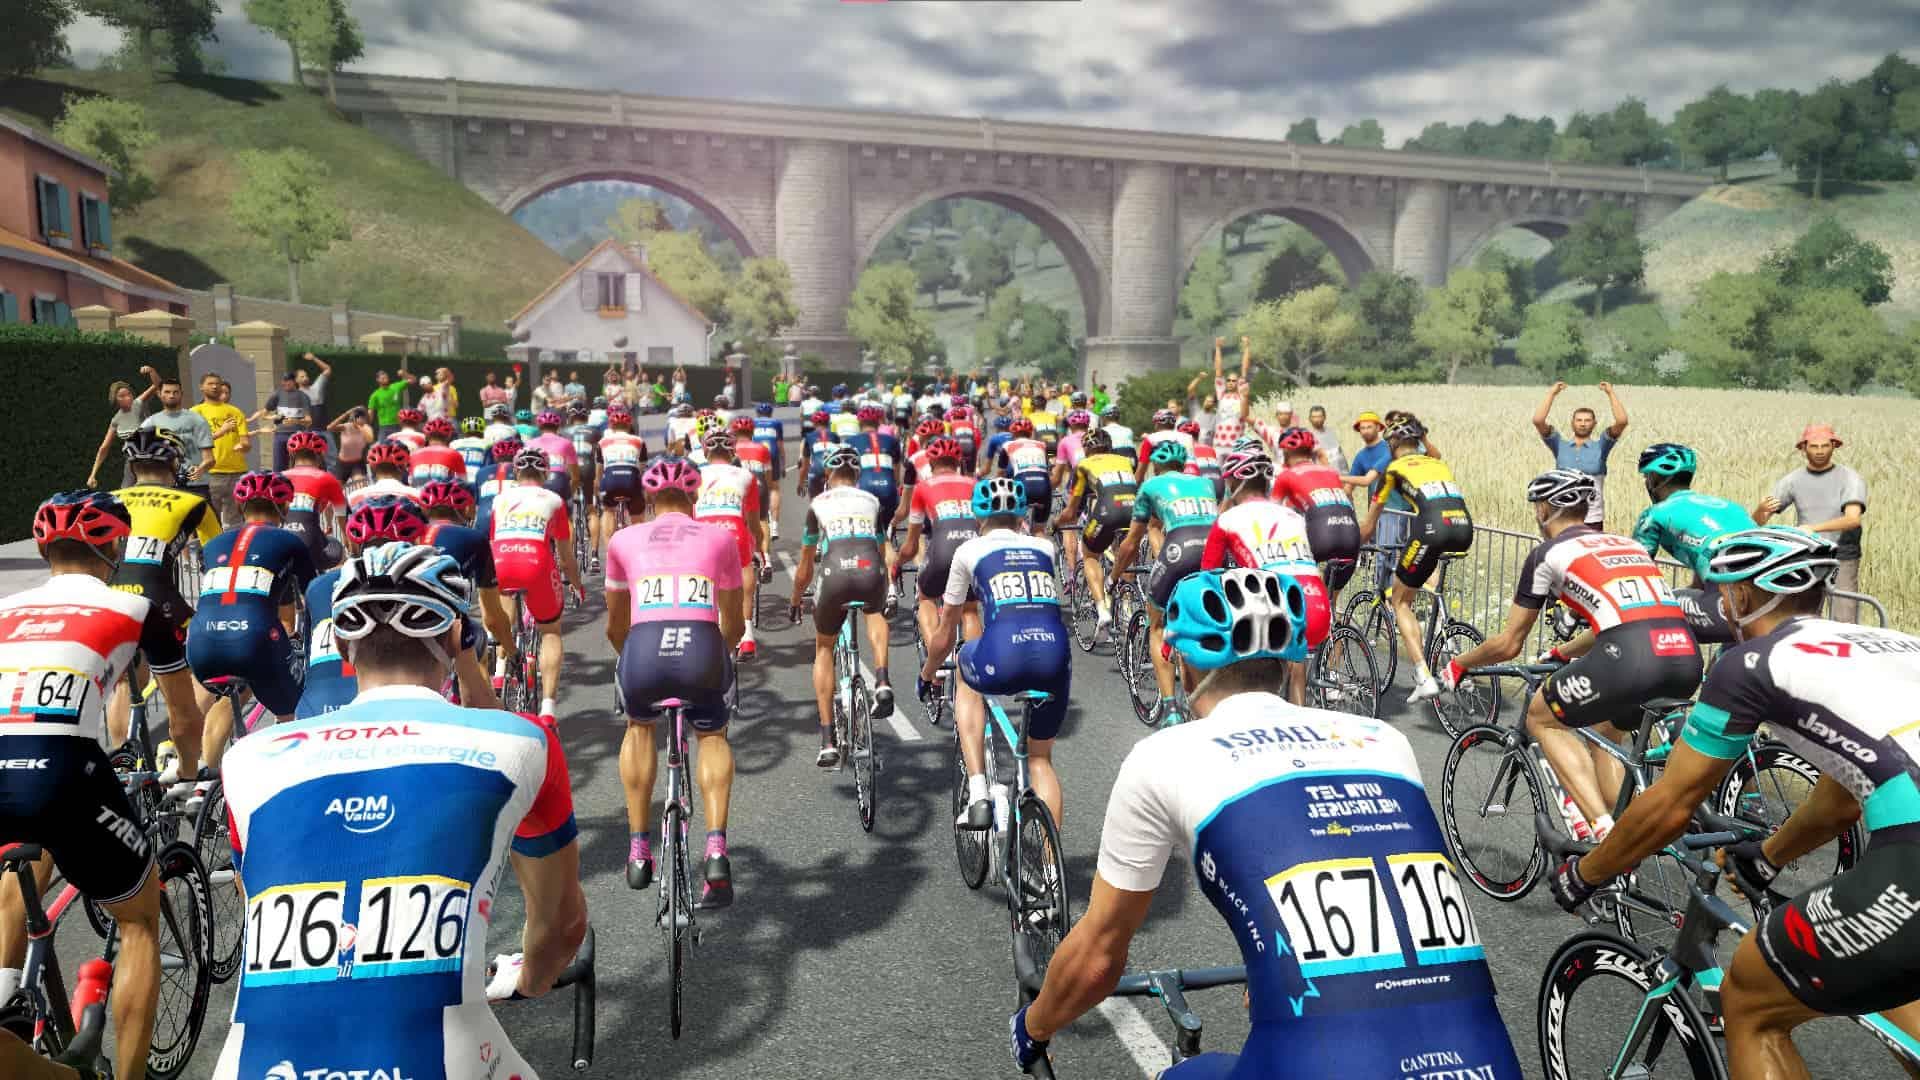 Tour de France 2021 - Xbox - EXON - גיימינג ותוכנות - משחקים ותוכנות למחשב ולאקס בוקס!